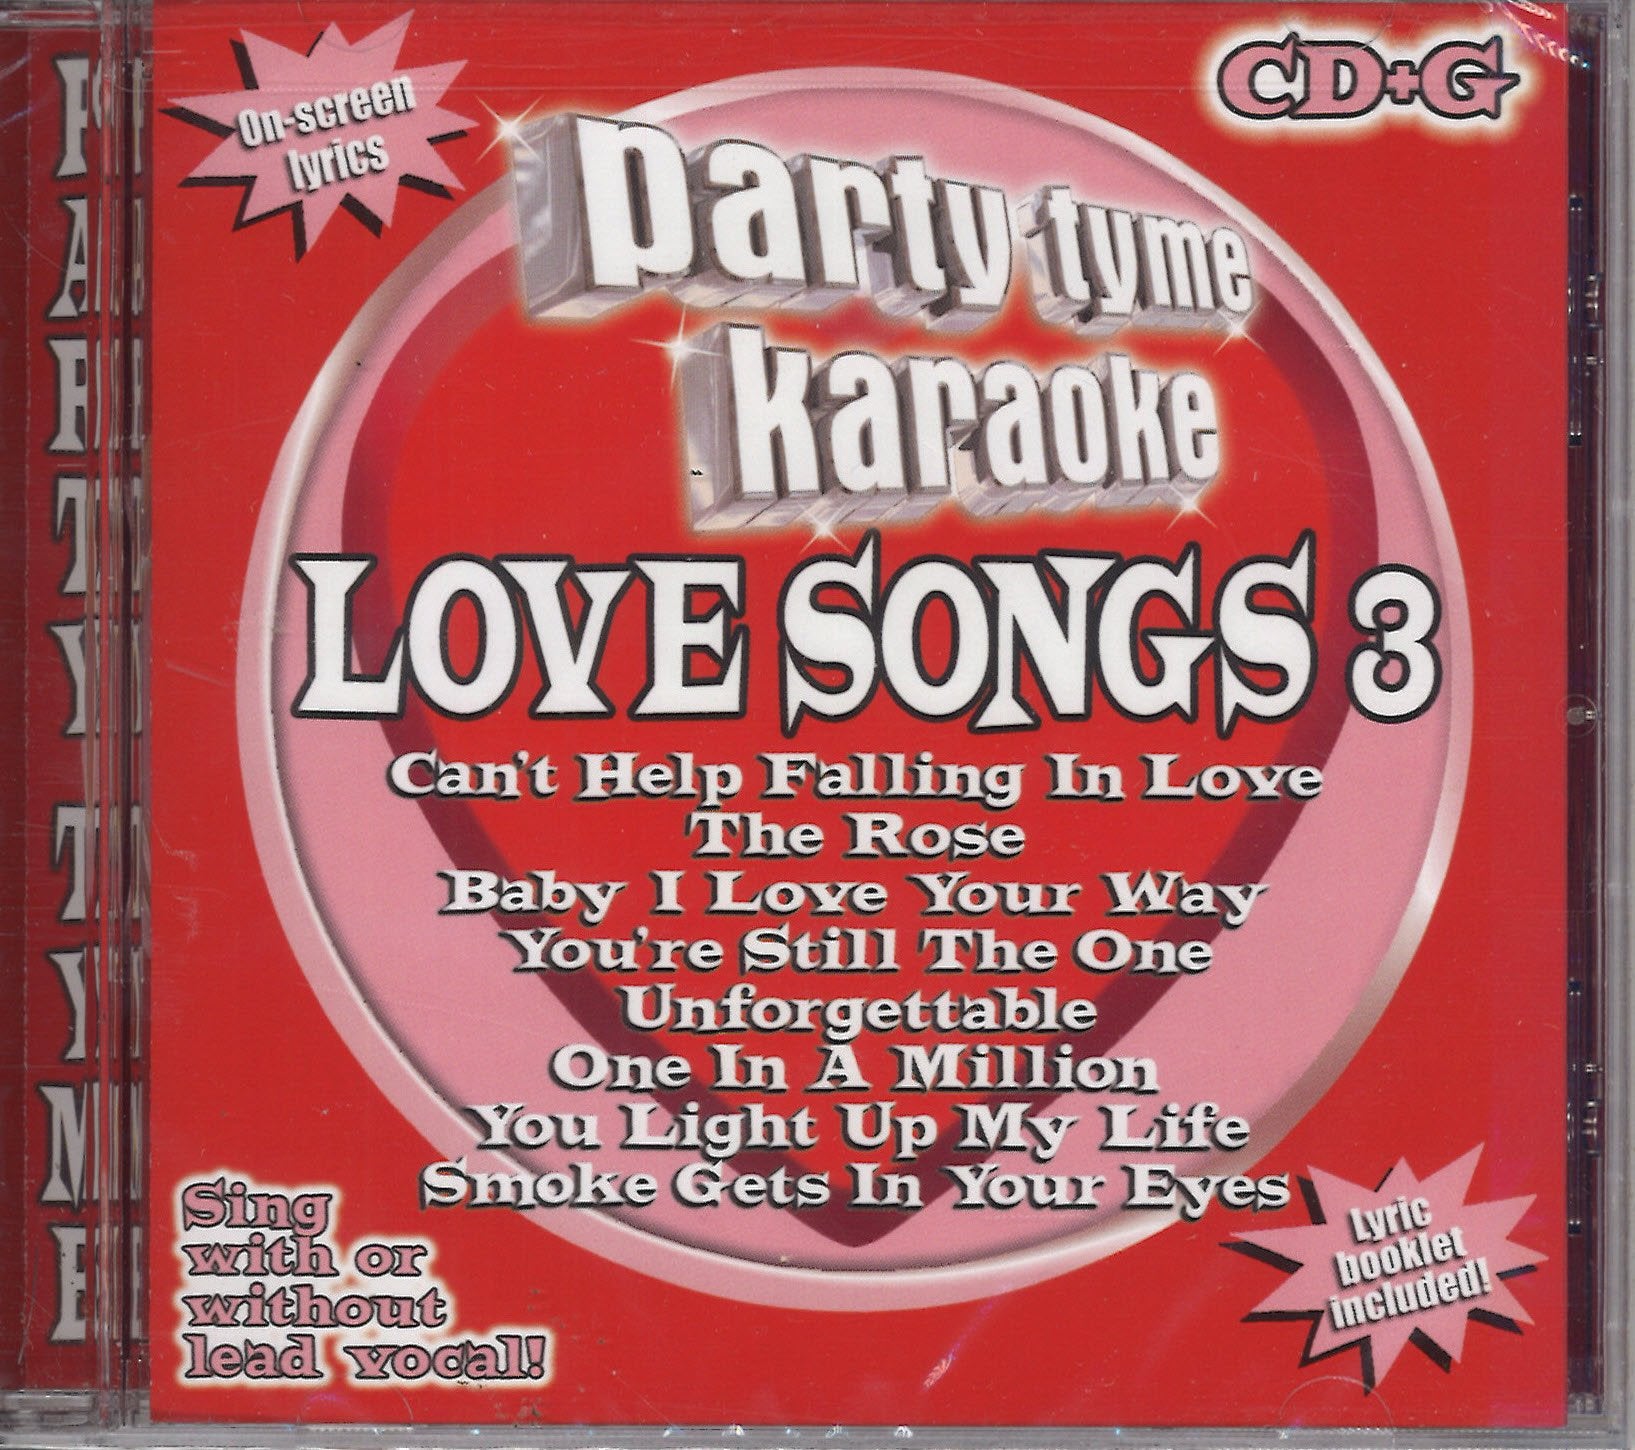 Party Tyme Karaoke CDG SYB4453 - Variety Pack 3 – ABC karaoke